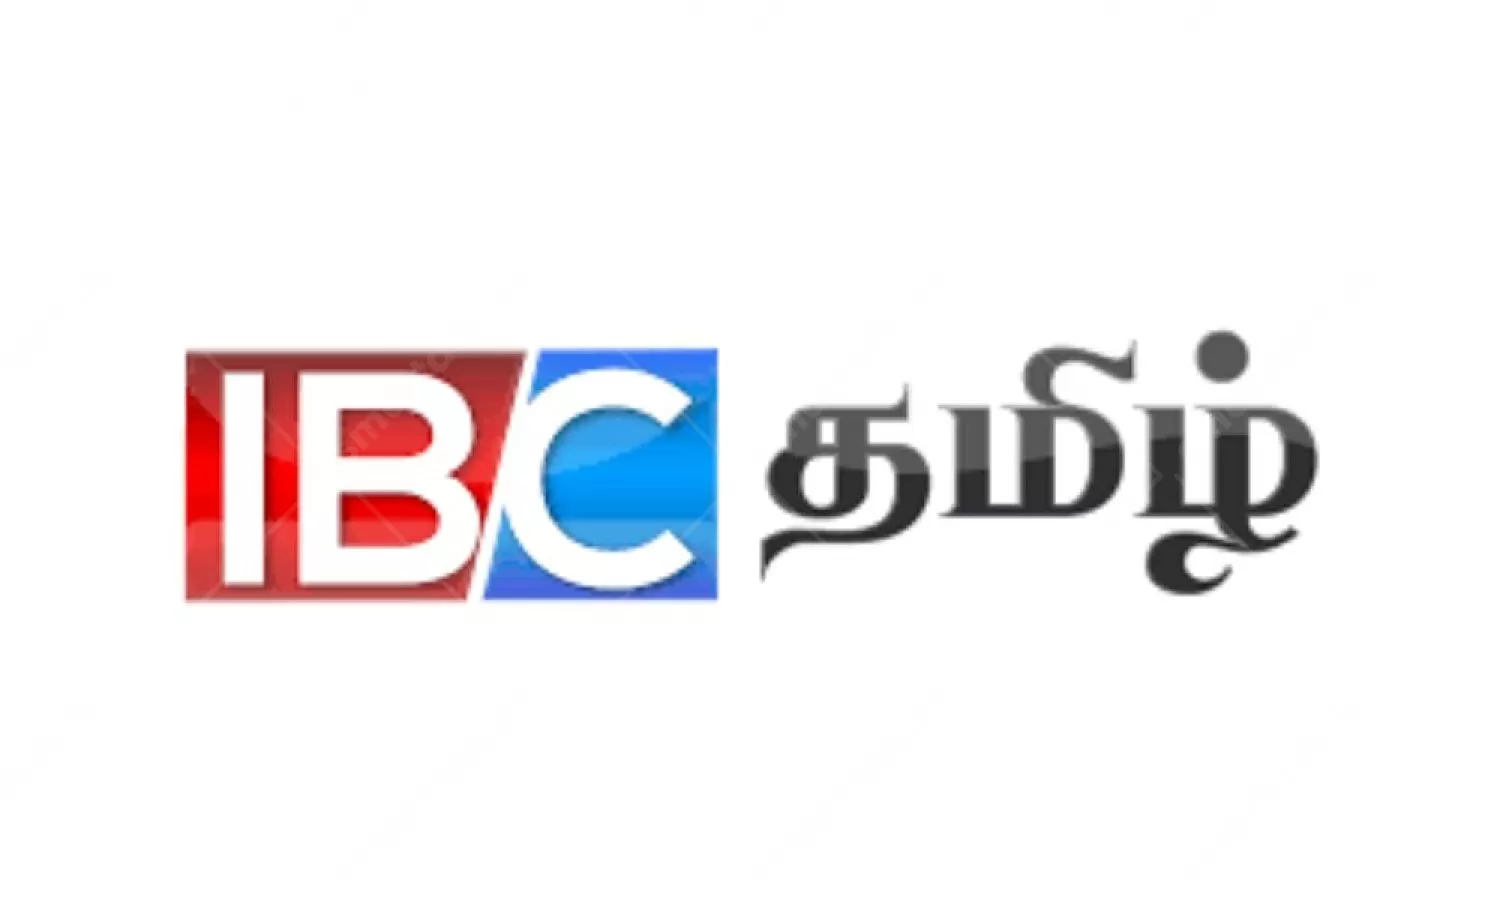 Digital Media IBC Tamil Advertising in India